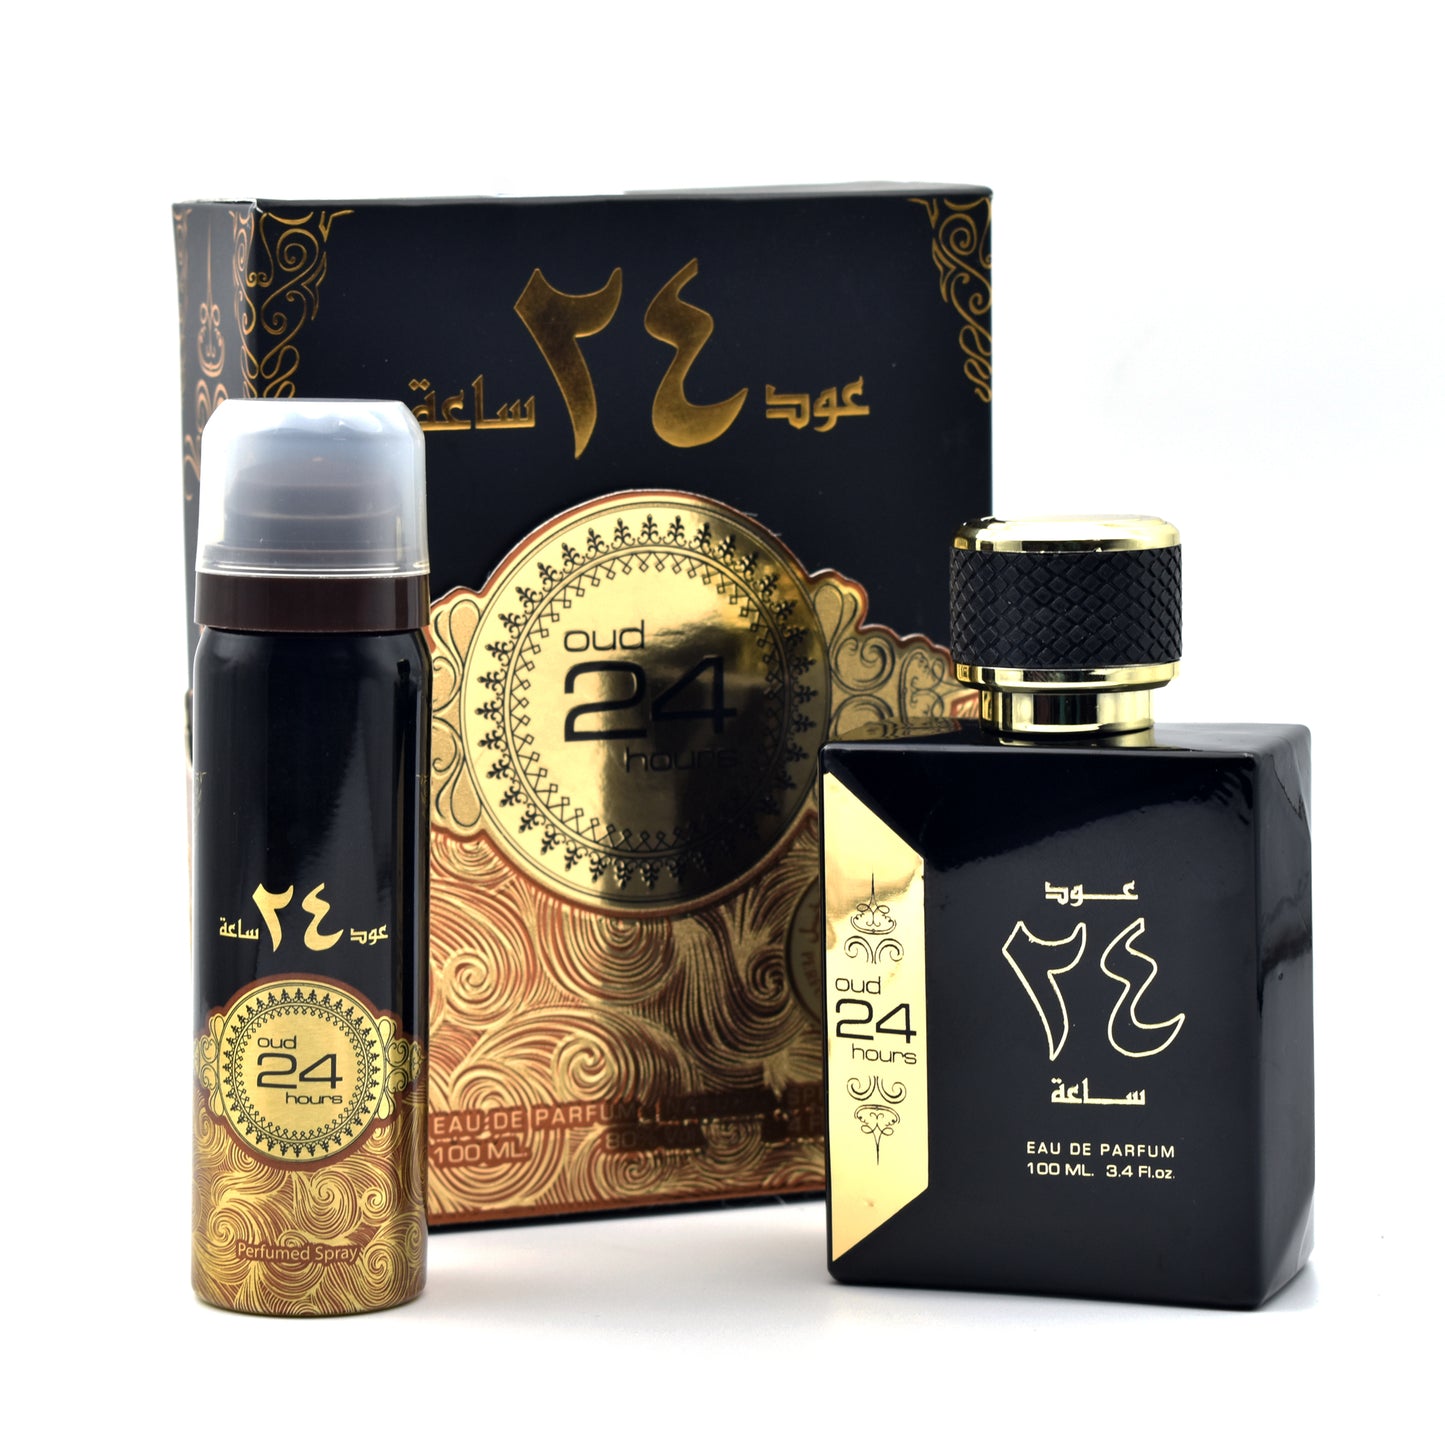 Premium Quality Attar Type Perfume Oud 24 Hours Made in U.A.E